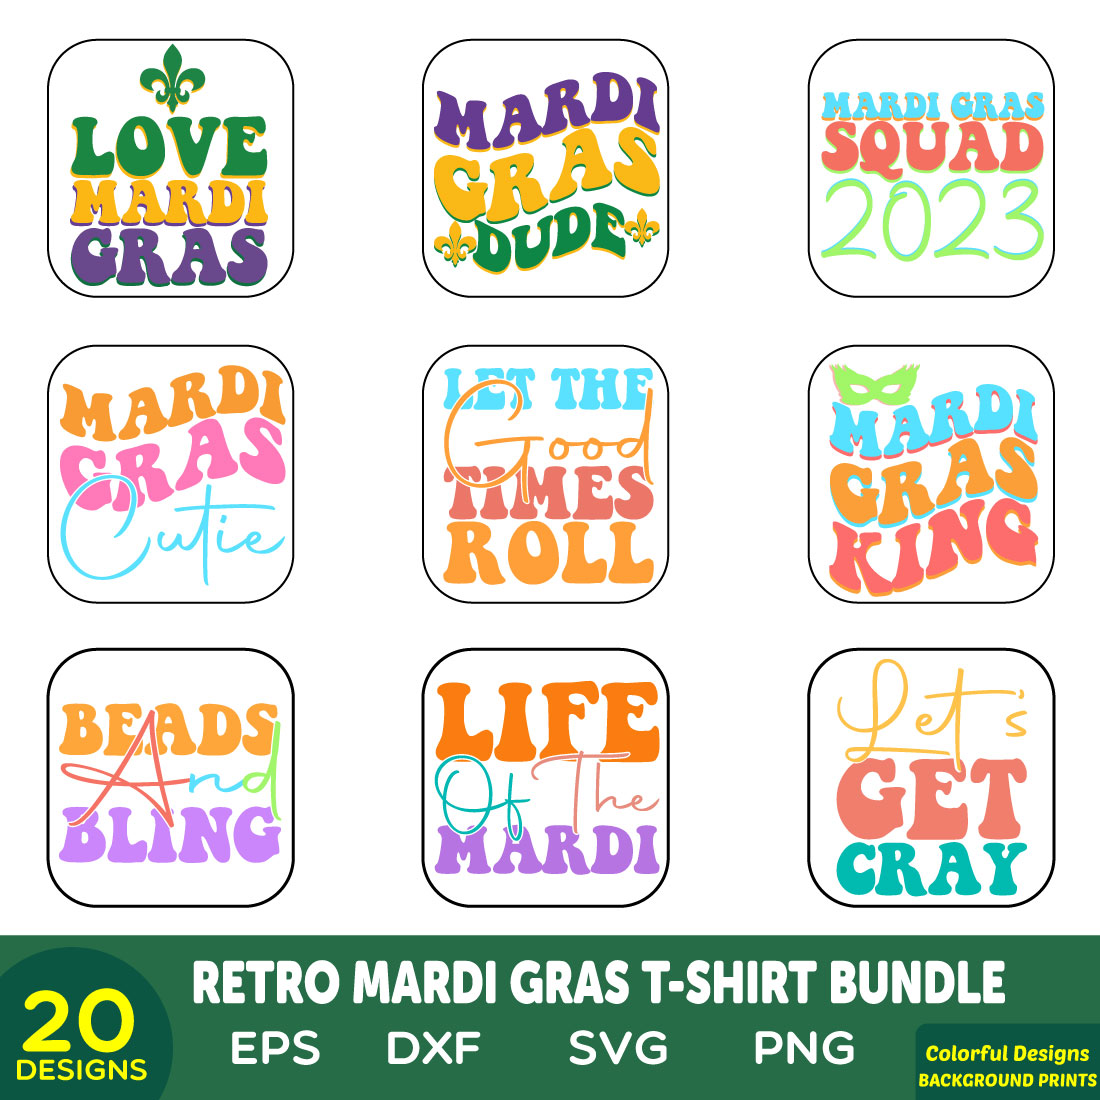 Retro Mardi Gras T-shirt Bundle preview image.